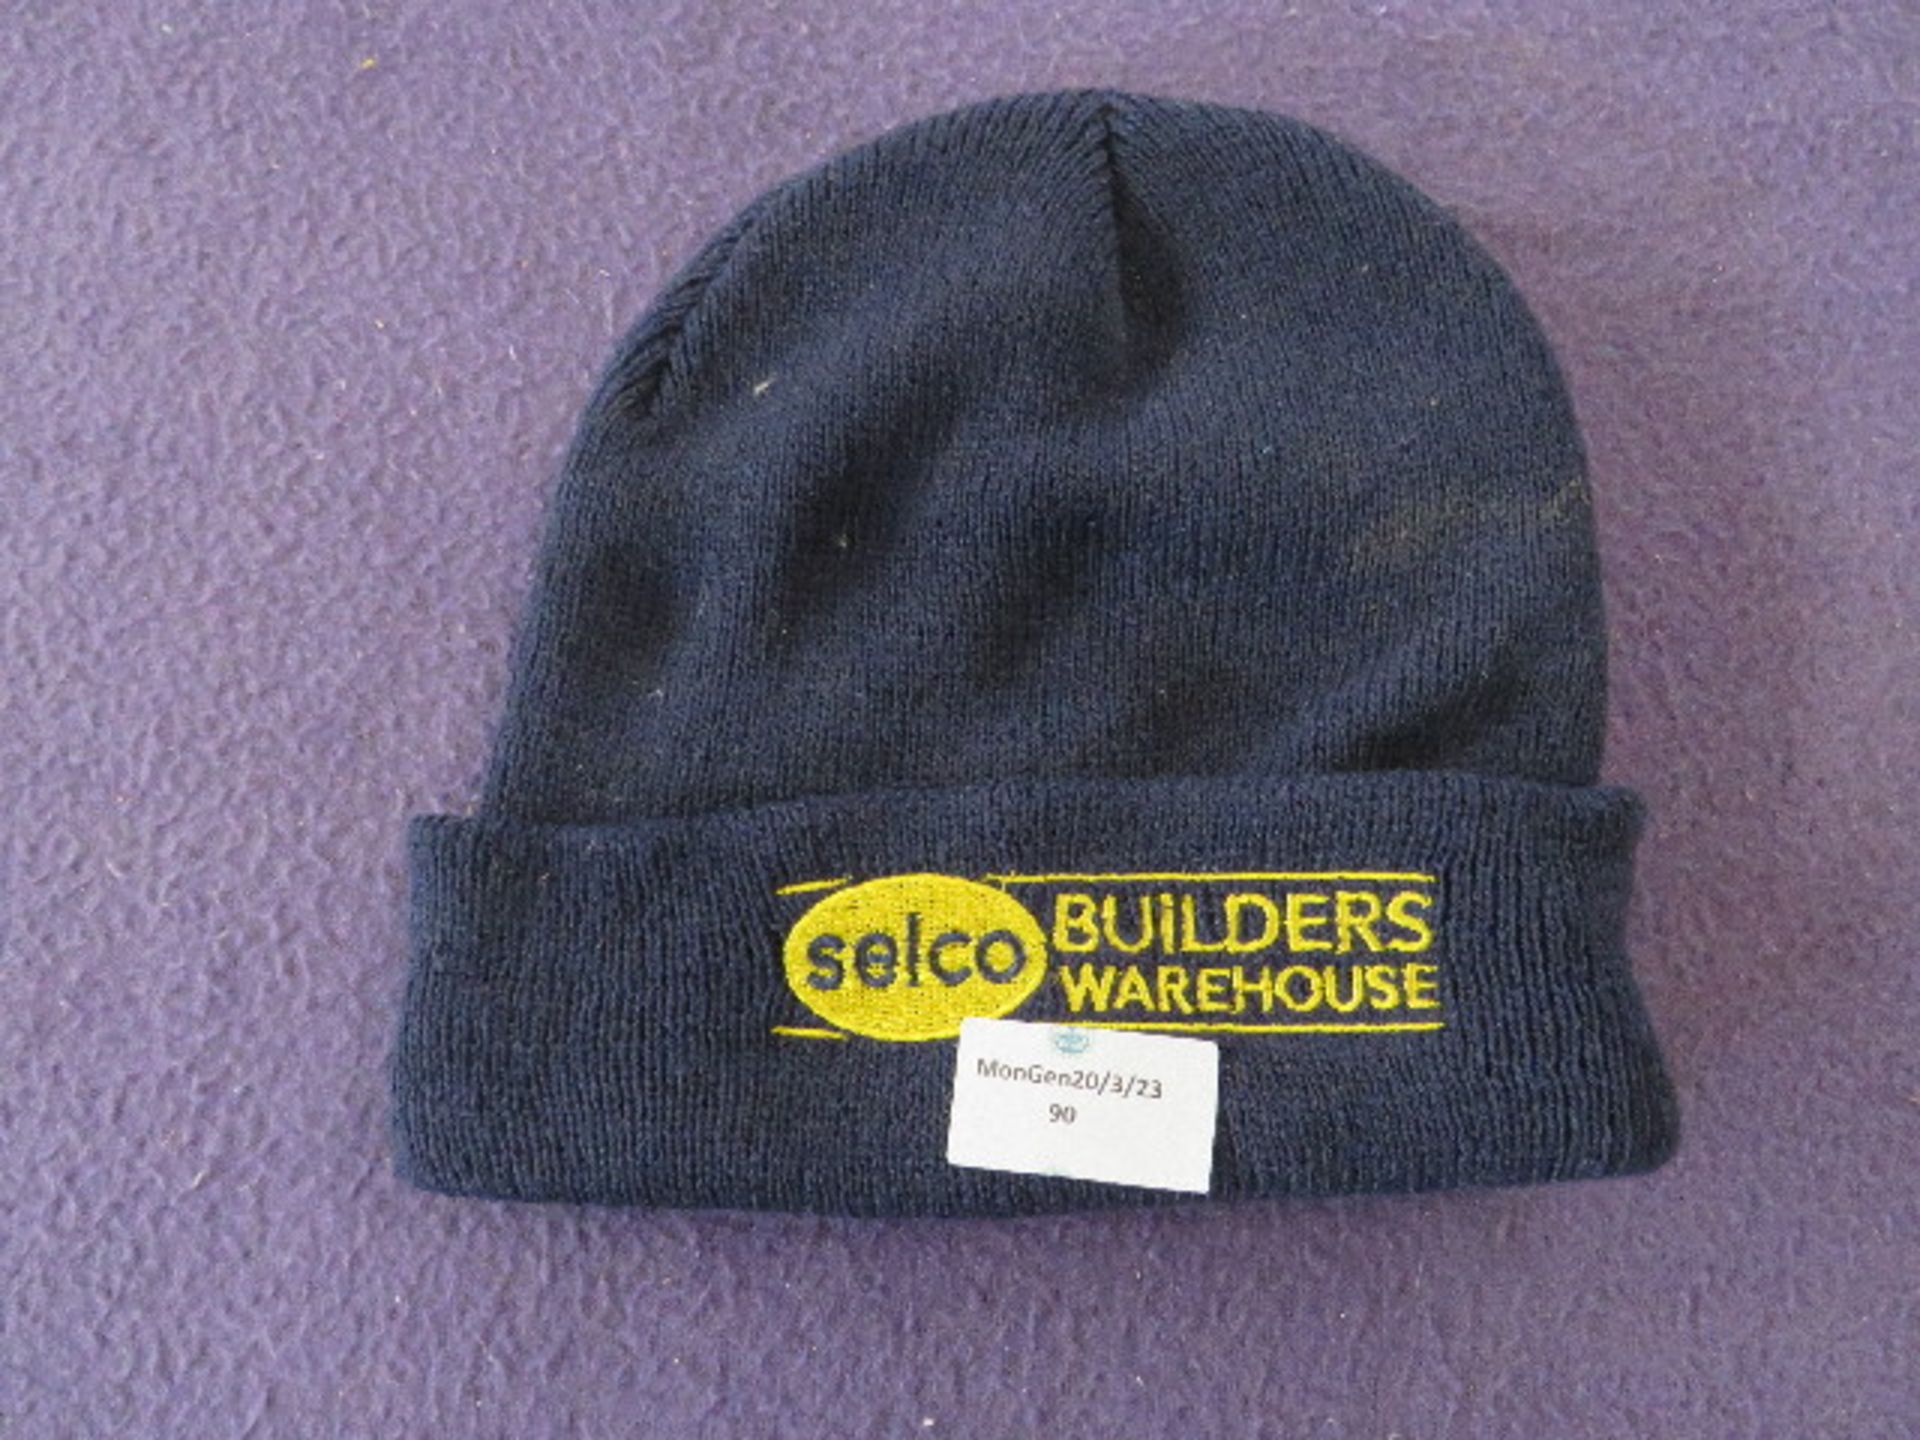 6x Selco Branded Navy Beanie Hats - Unused.